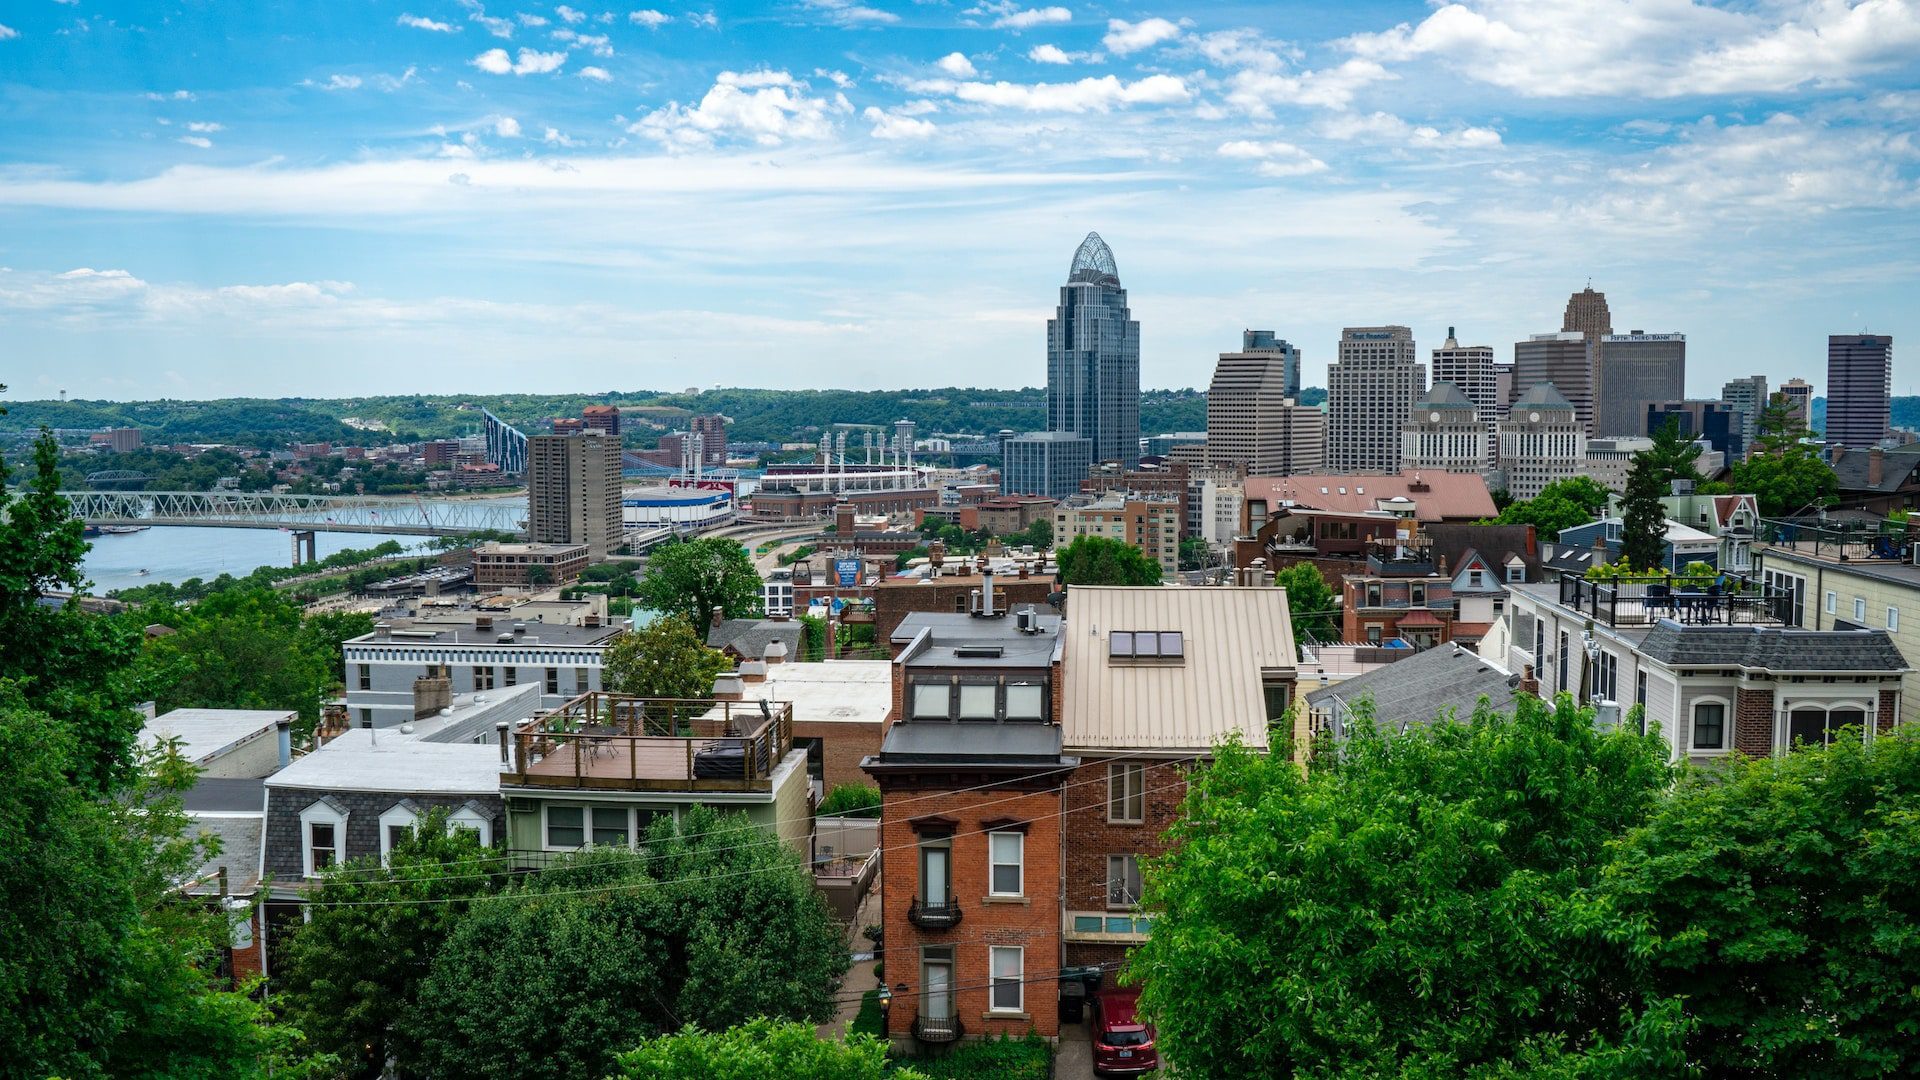 Aerial city view of downtown Cincinnati, Ohio.